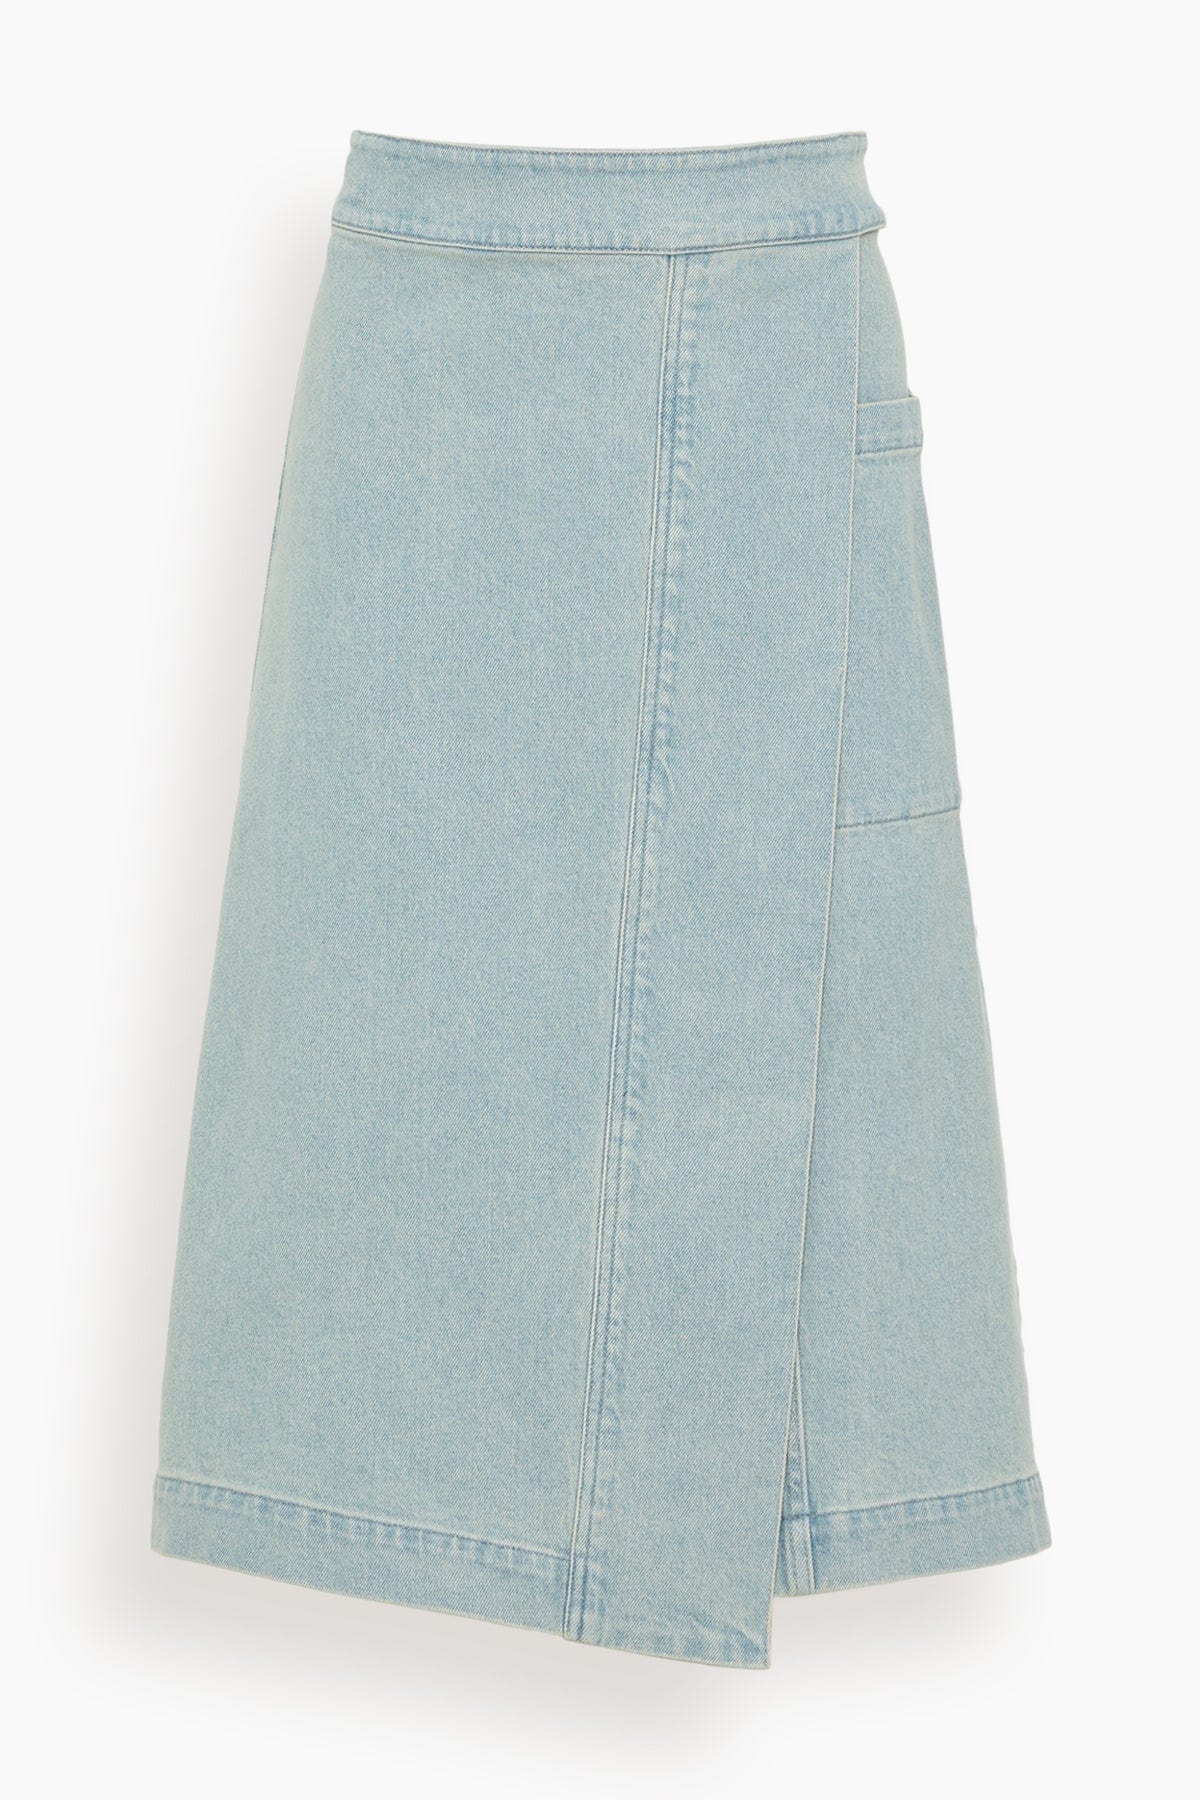 Proenza Schouler White Label Iris Wrap Skirt in Grey Indigo - Blue - Size: 2